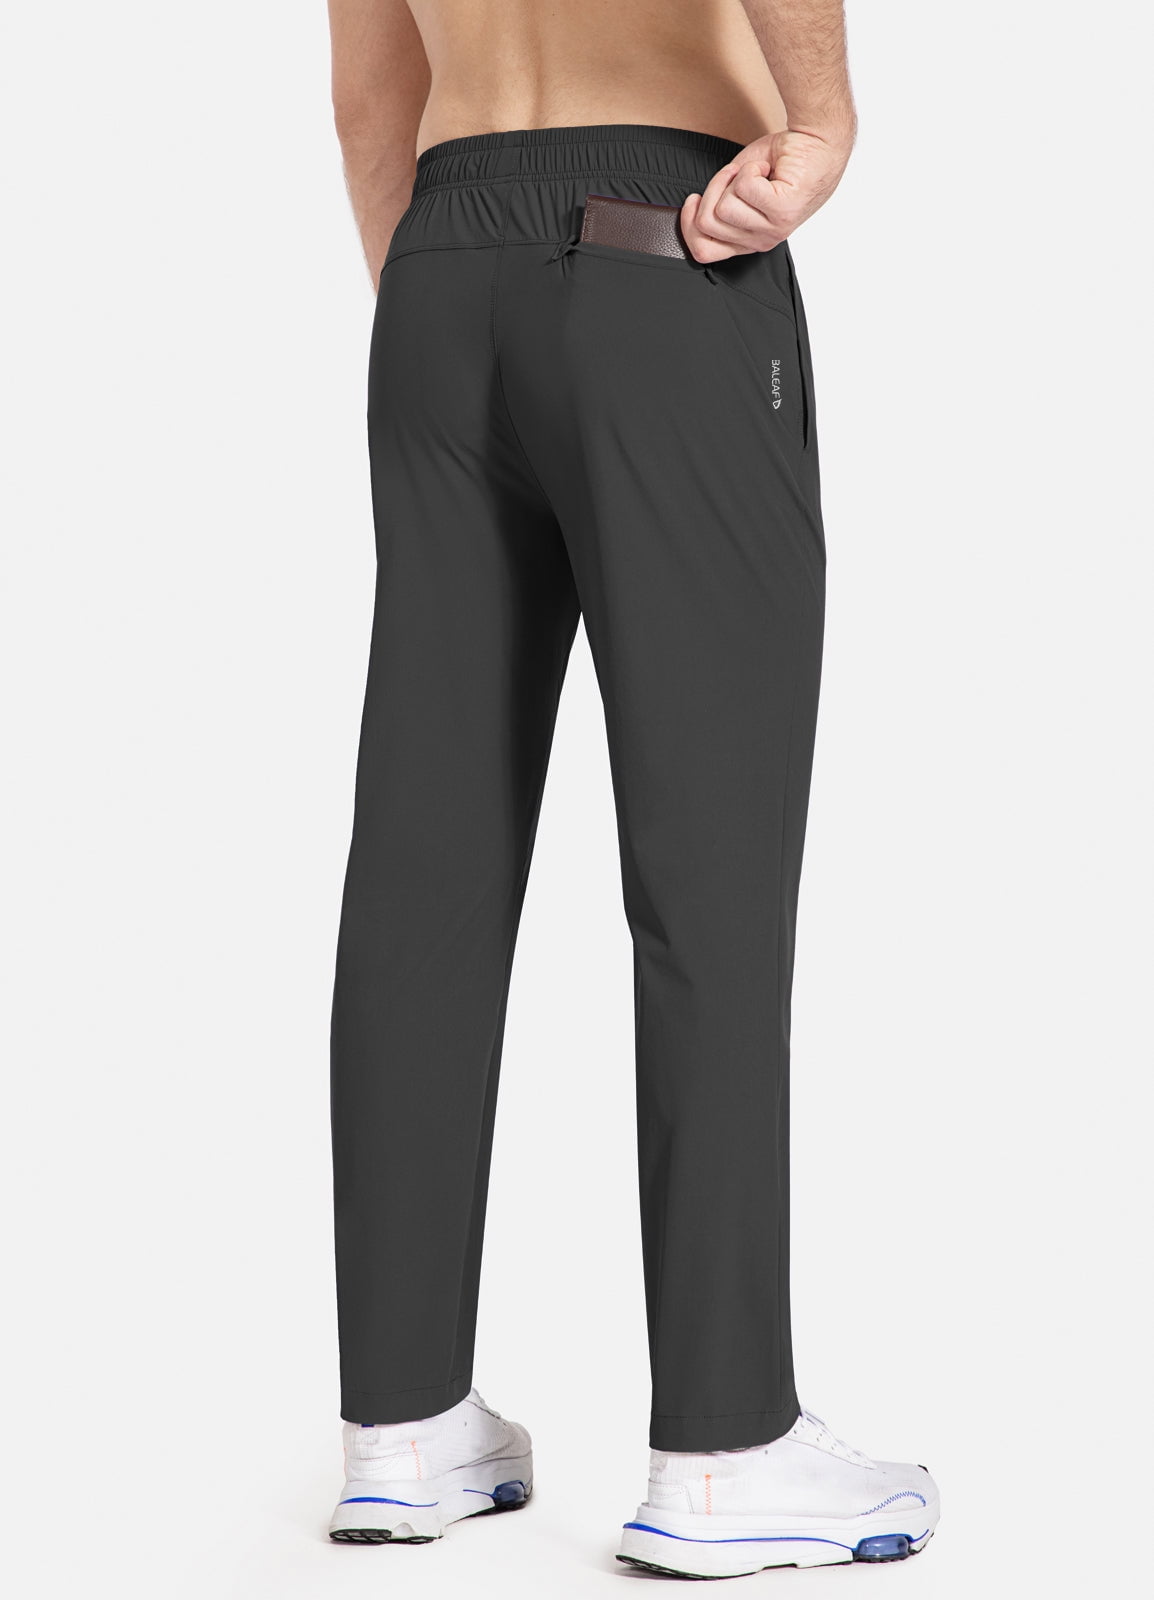 BALEAF Men's Golf Pants Workout Athletic Pants Elastic Waist ...